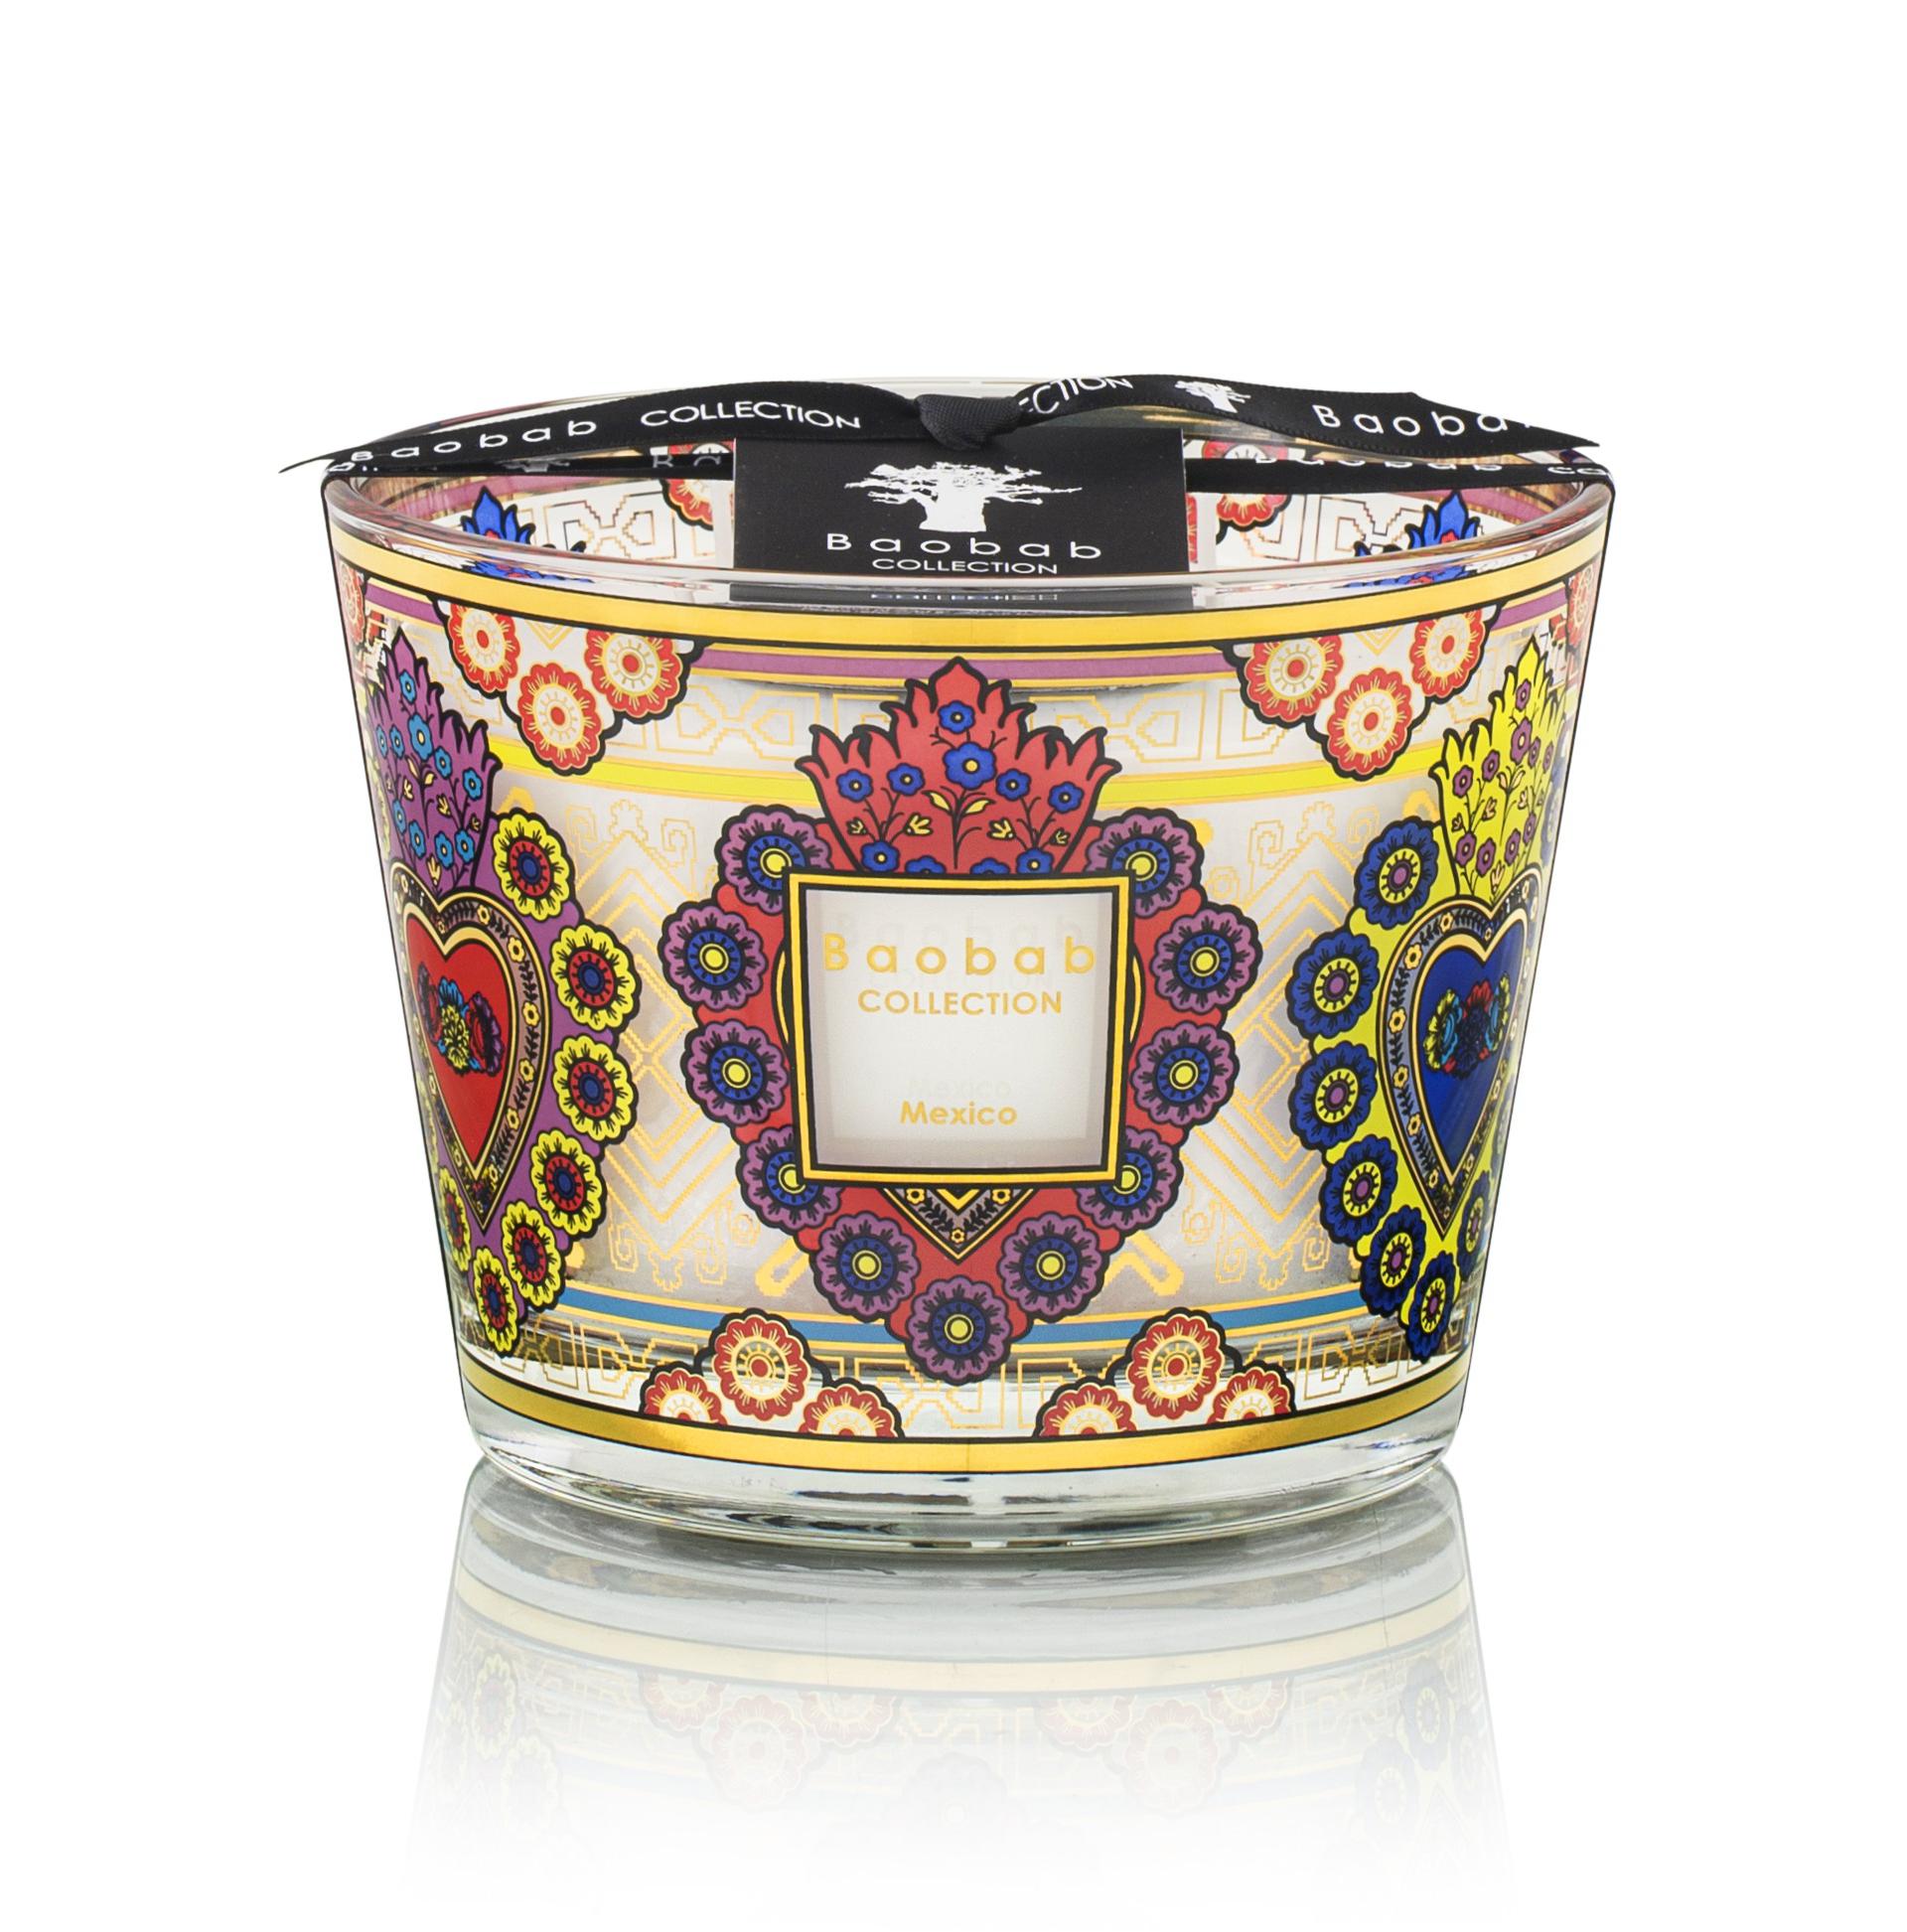 Свеча Mexico, Mexico Limited Edition, Baobab Collection, 15&nbsp;860 руб. (shop.perfume4home.ru)